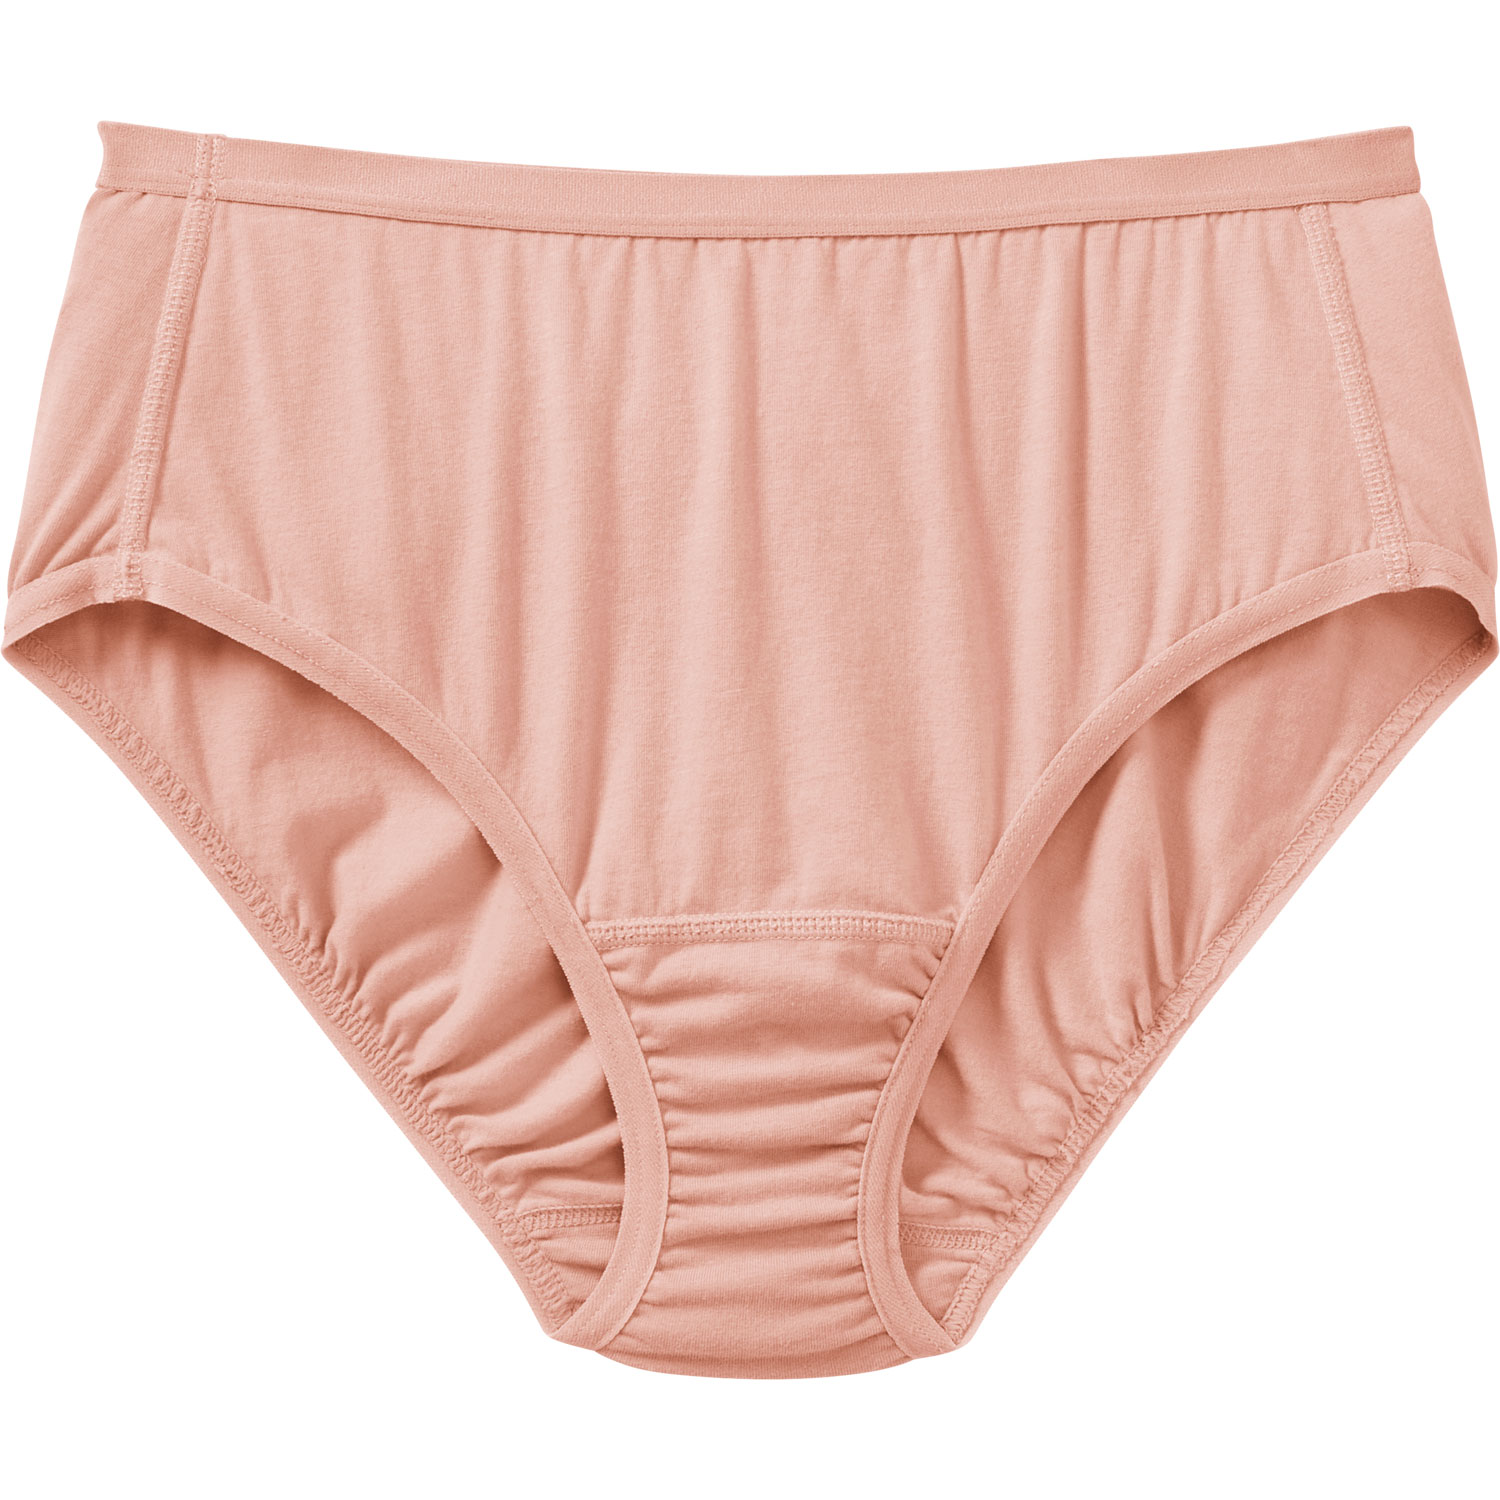 Buy Wholesale China Wholesale Sexy Ladies Women Lace Panties Brief Organic  Cotton Underwear & Organic Cotton Underwear at USD 0.48